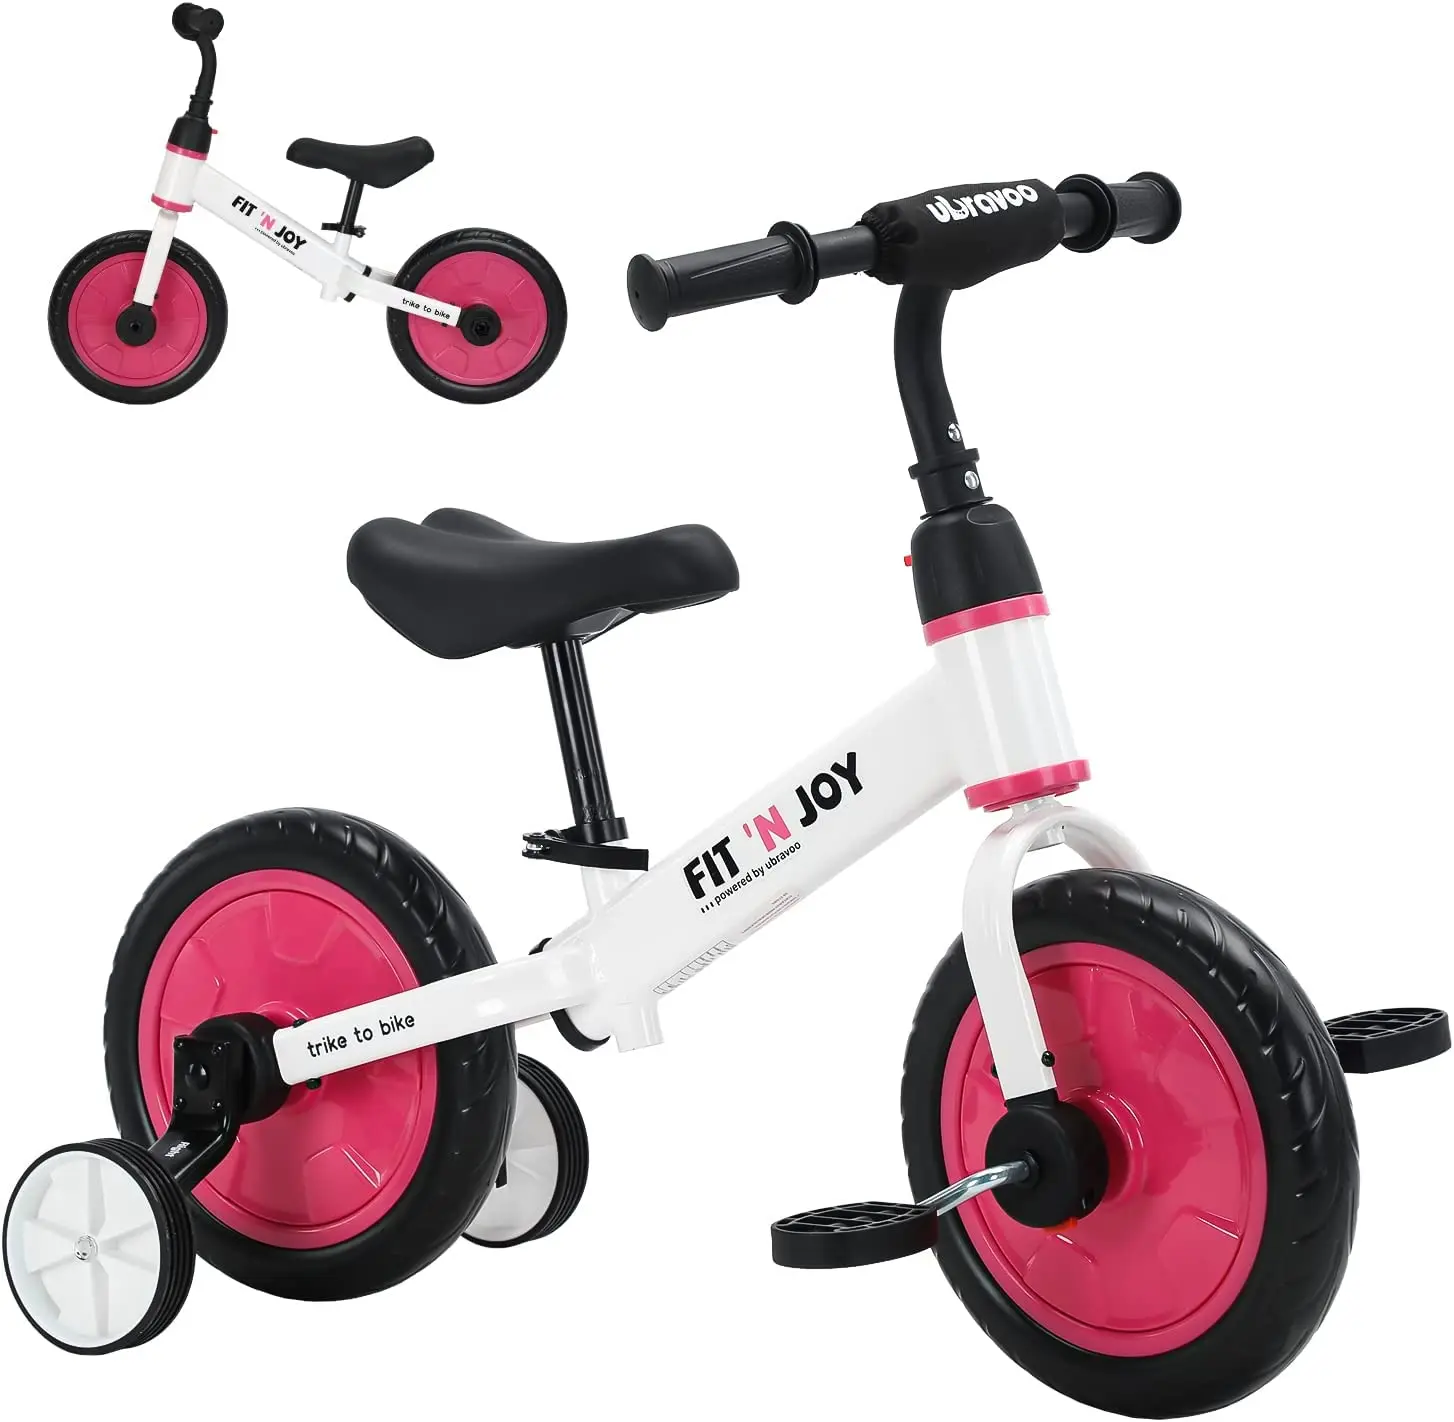 UBRAVOO-Fit-n-Joy-Beginner-Toddler-Training-Bicycle-for-Boys-Girls-2-4-4-in-1-1